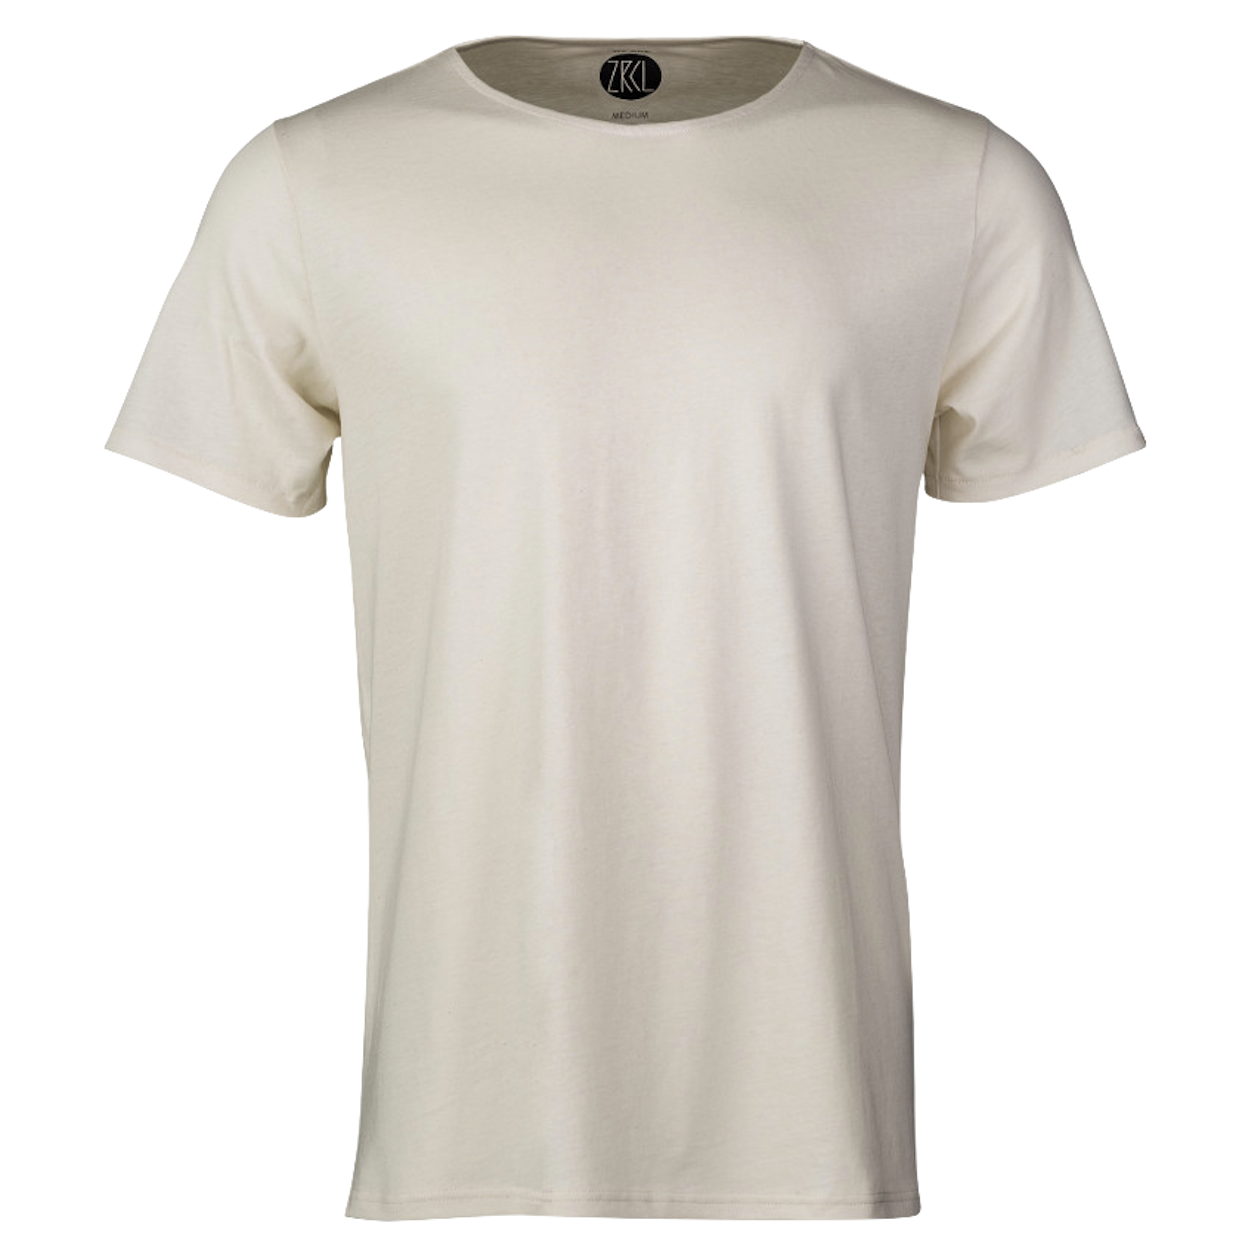 ZRCL ZRCL, M Basic Loose T-Shirt, natural, M